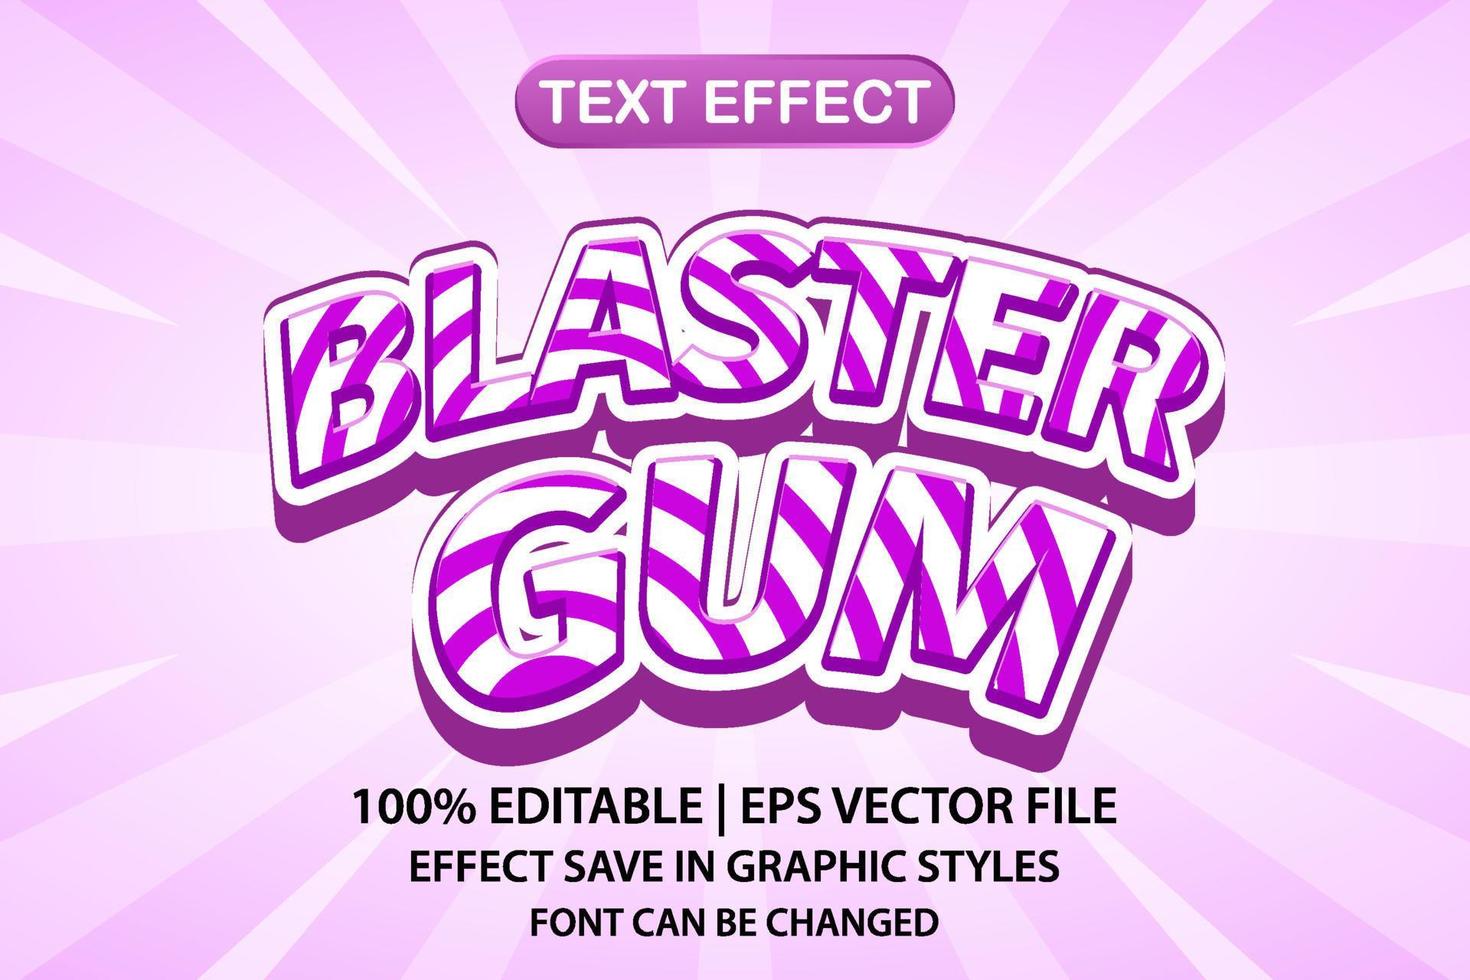 efecto de texto editable 3d de chicle blaster vector